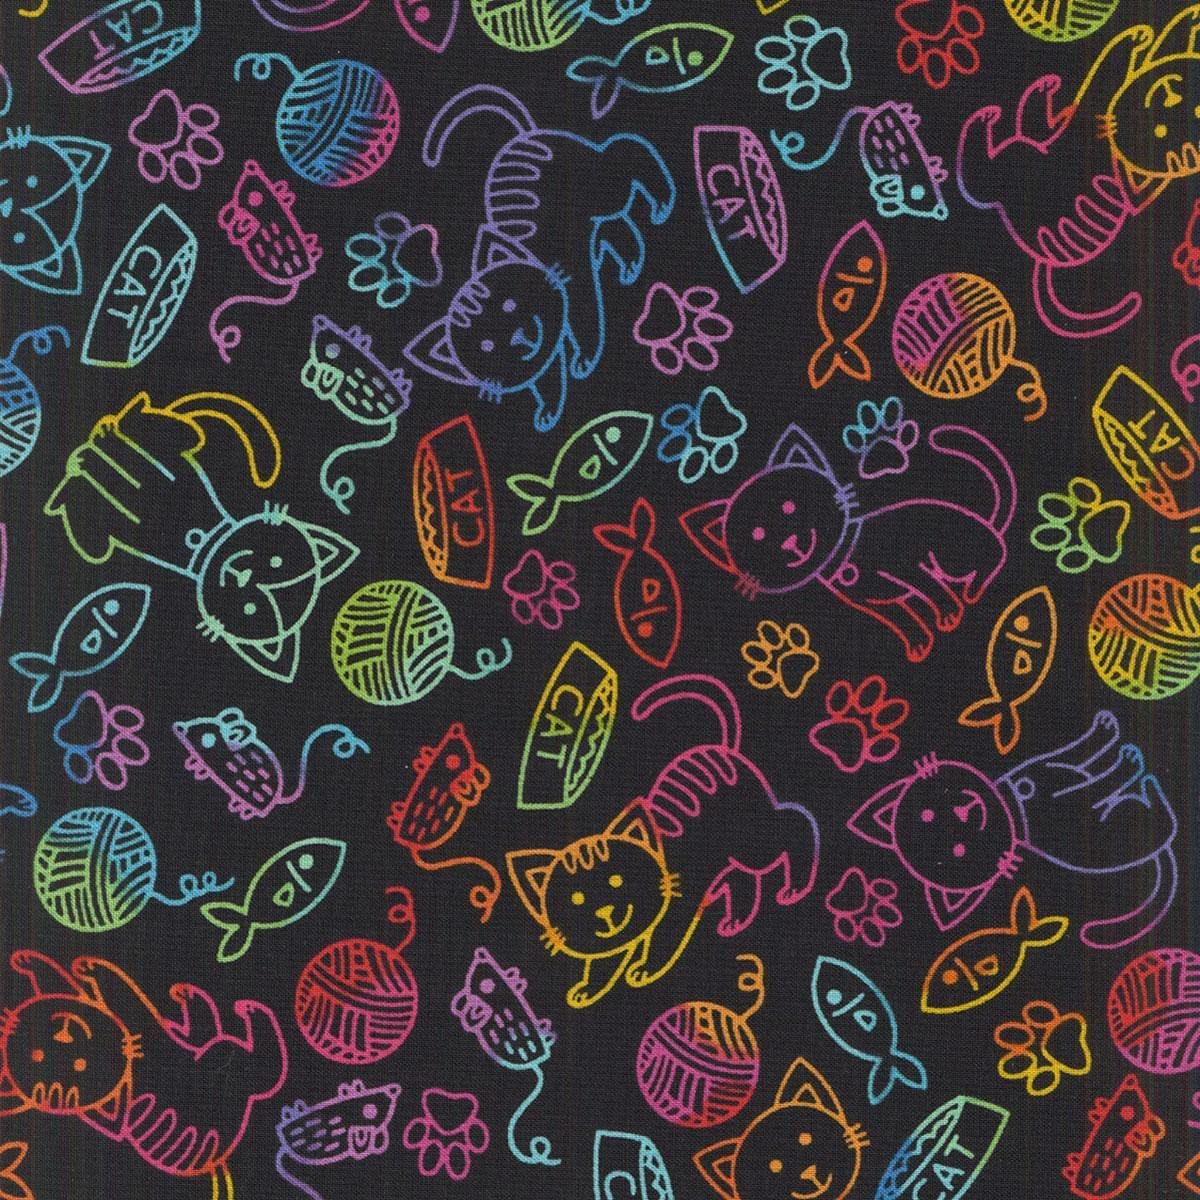 rainbow-cat-doodles fabric